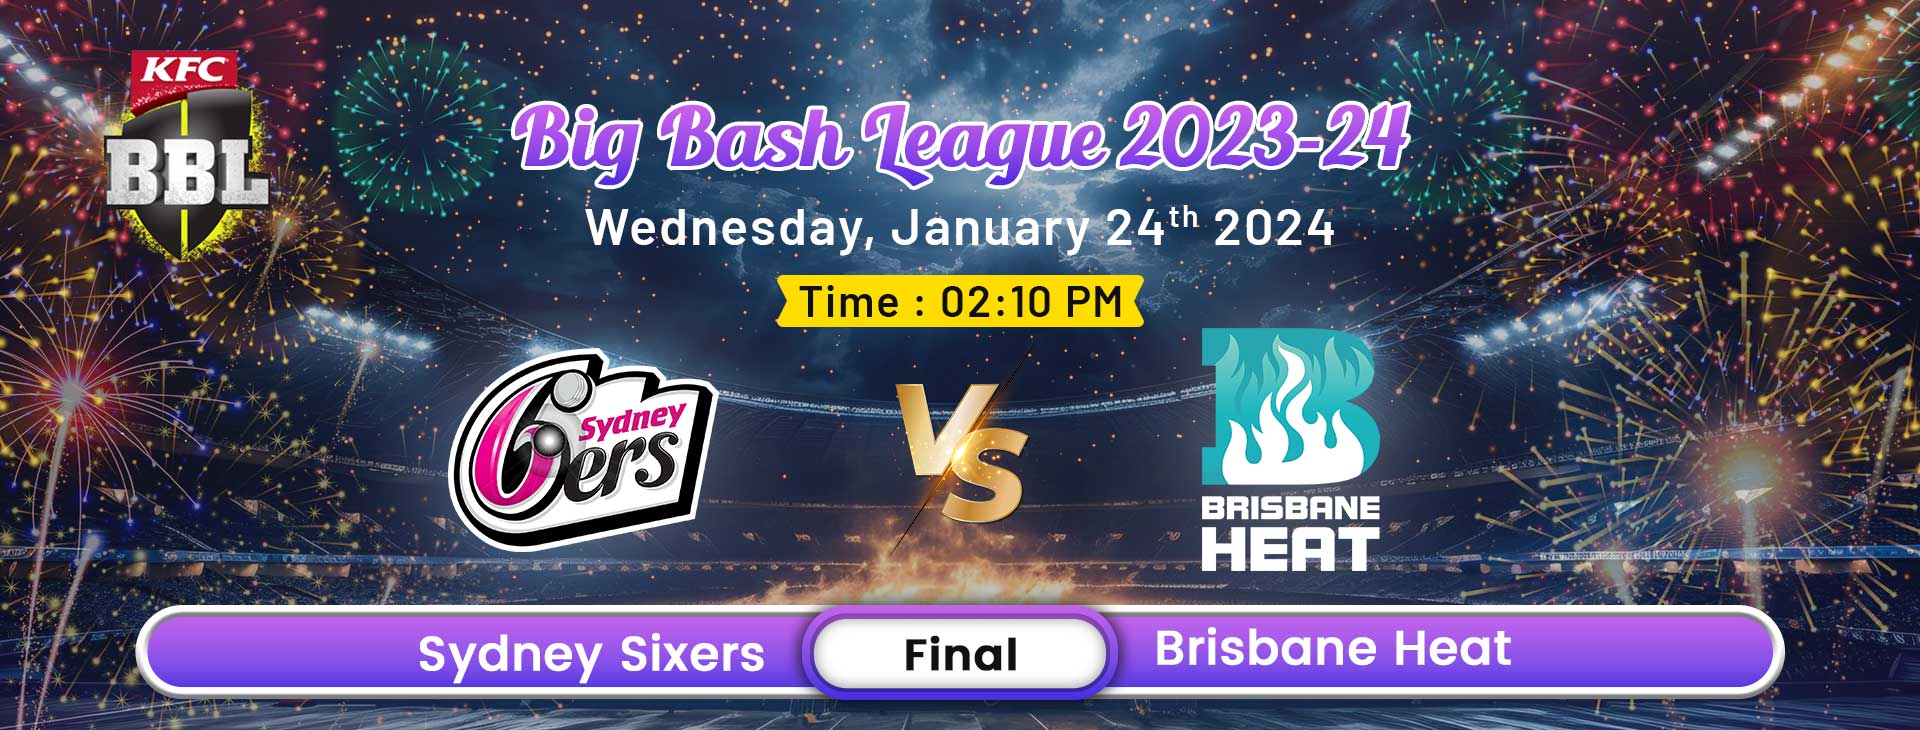 BBL 2024 Final Brisbane Heat Torch Sydney Sixers; Won by 54 Runs to